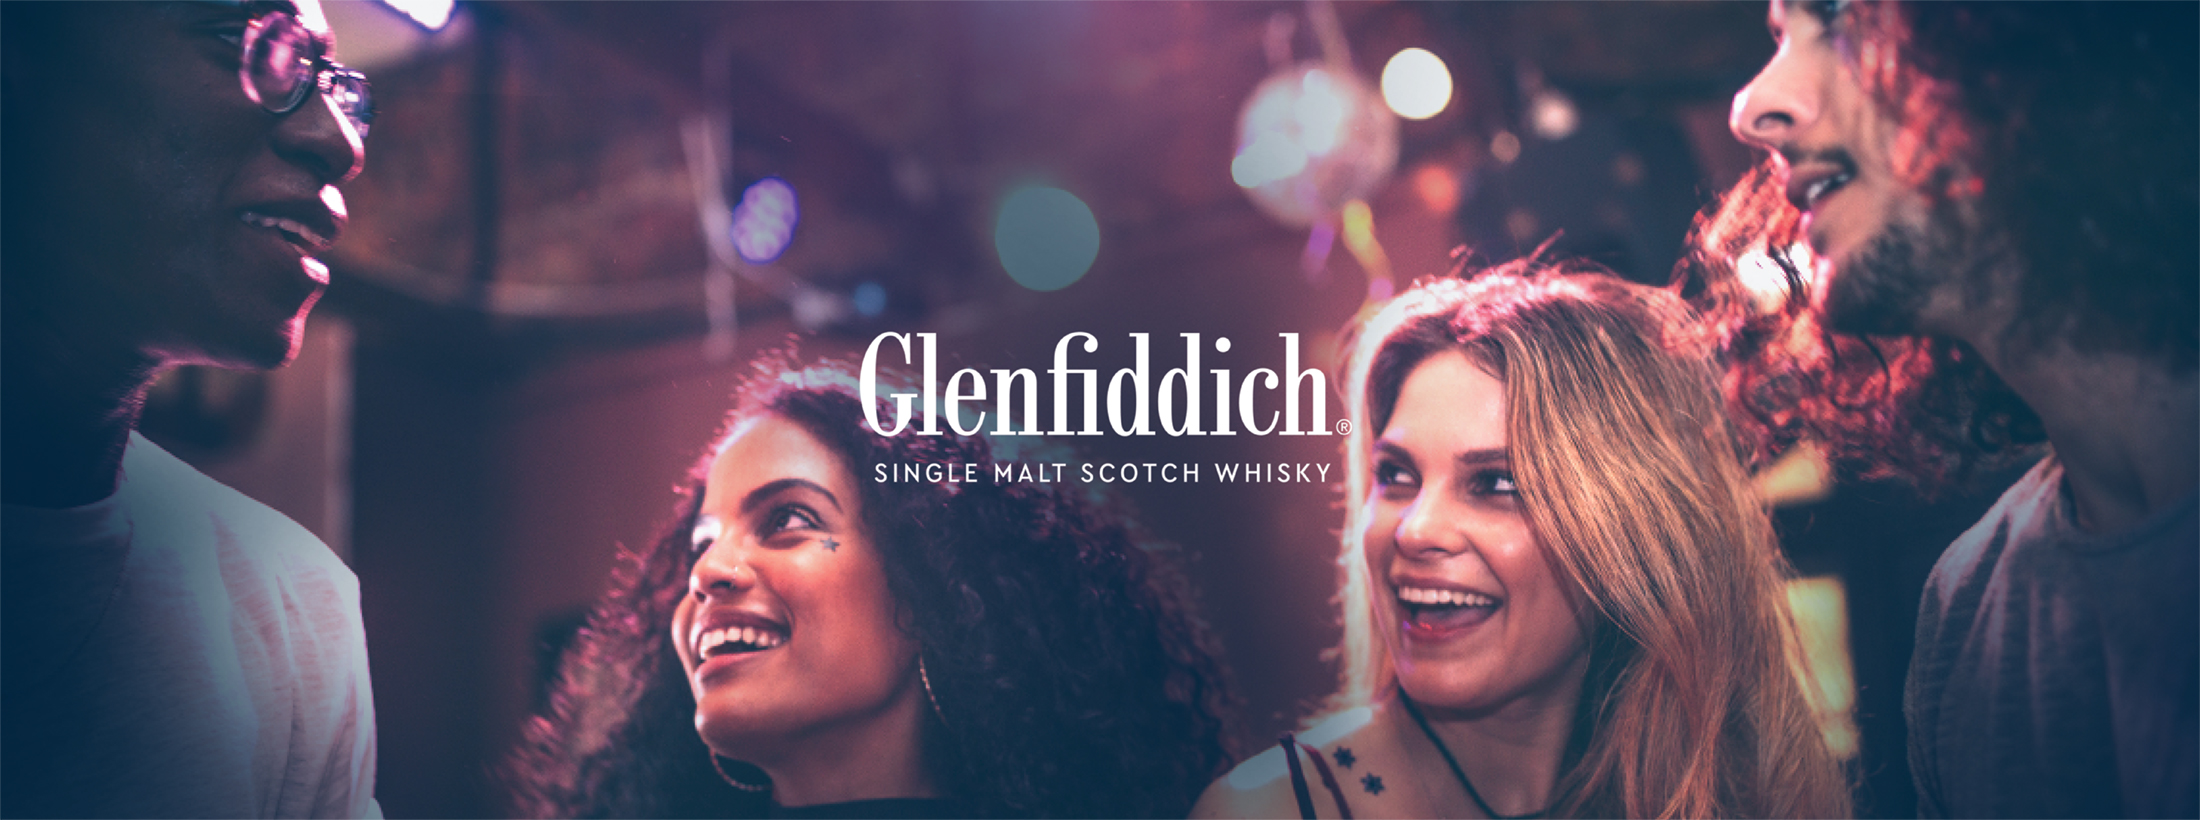 Edward Snell & Co. | Brands | Glenfiddich